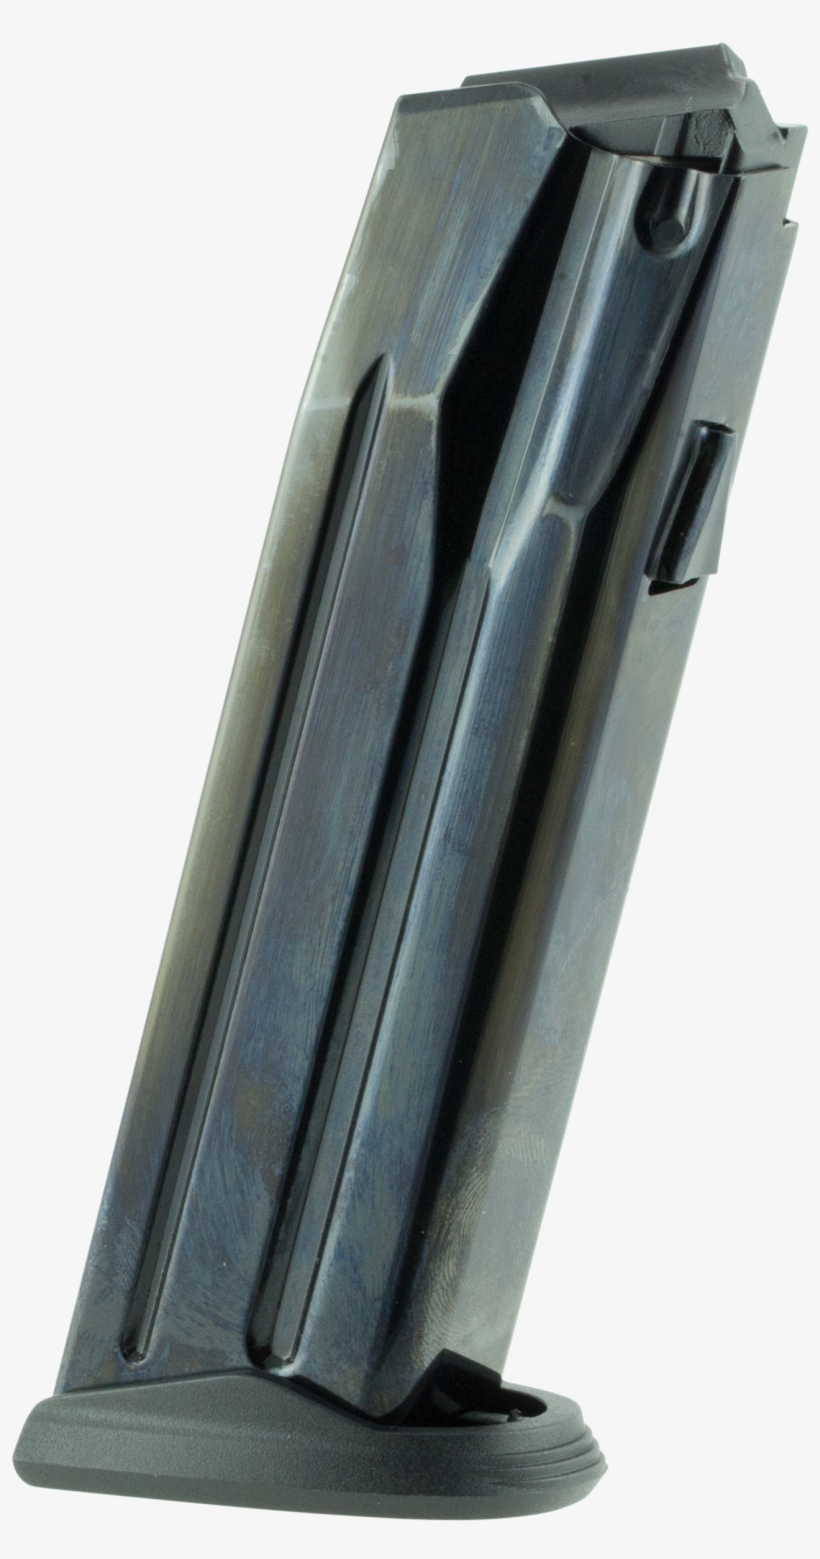 Beretta Usa Jmapx179r Apx 9mm Luger 17 Rd Steel Black - Beretta Apx, transparent png #6321714